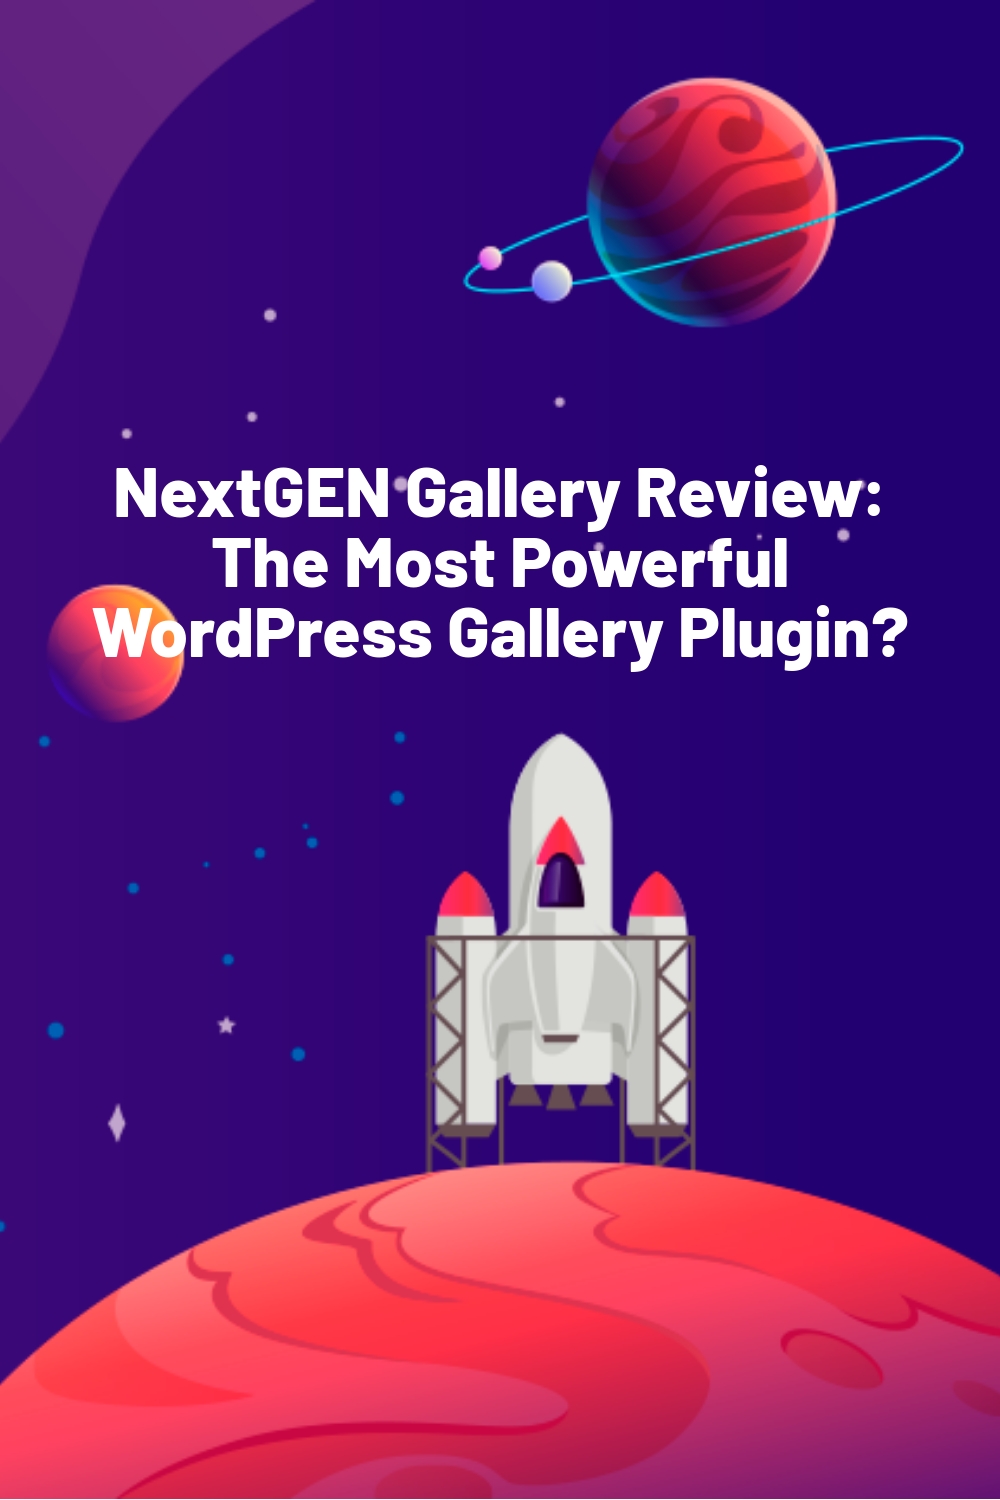 NextGEN Gallery Review: The Most Powerful WordPress Gallery Plugin?